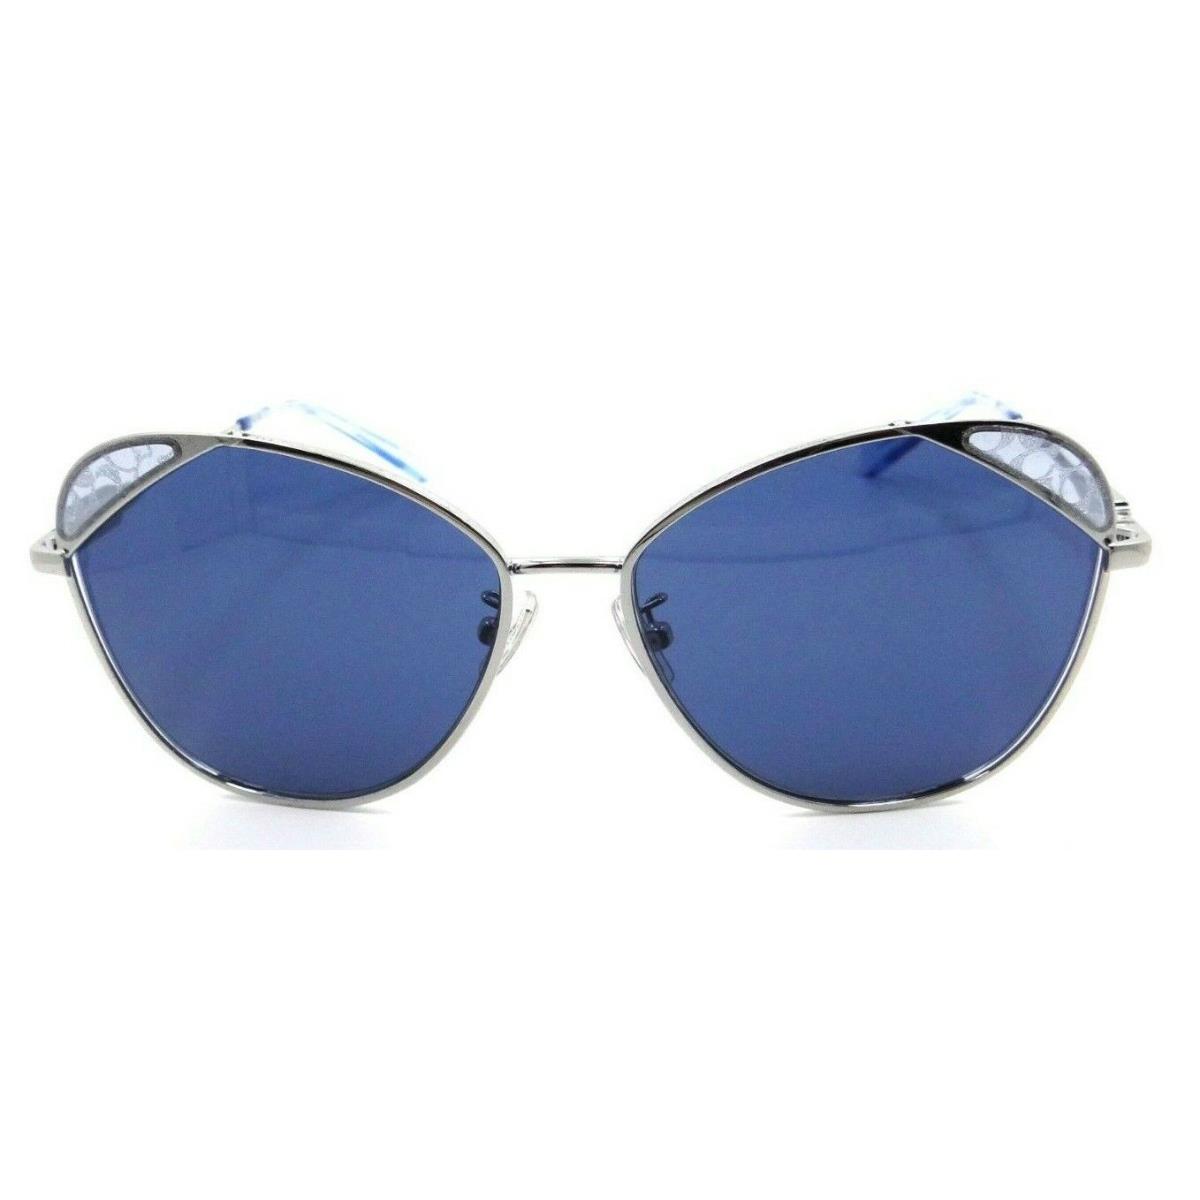 Coach sunglasses  - Multicolor Frame